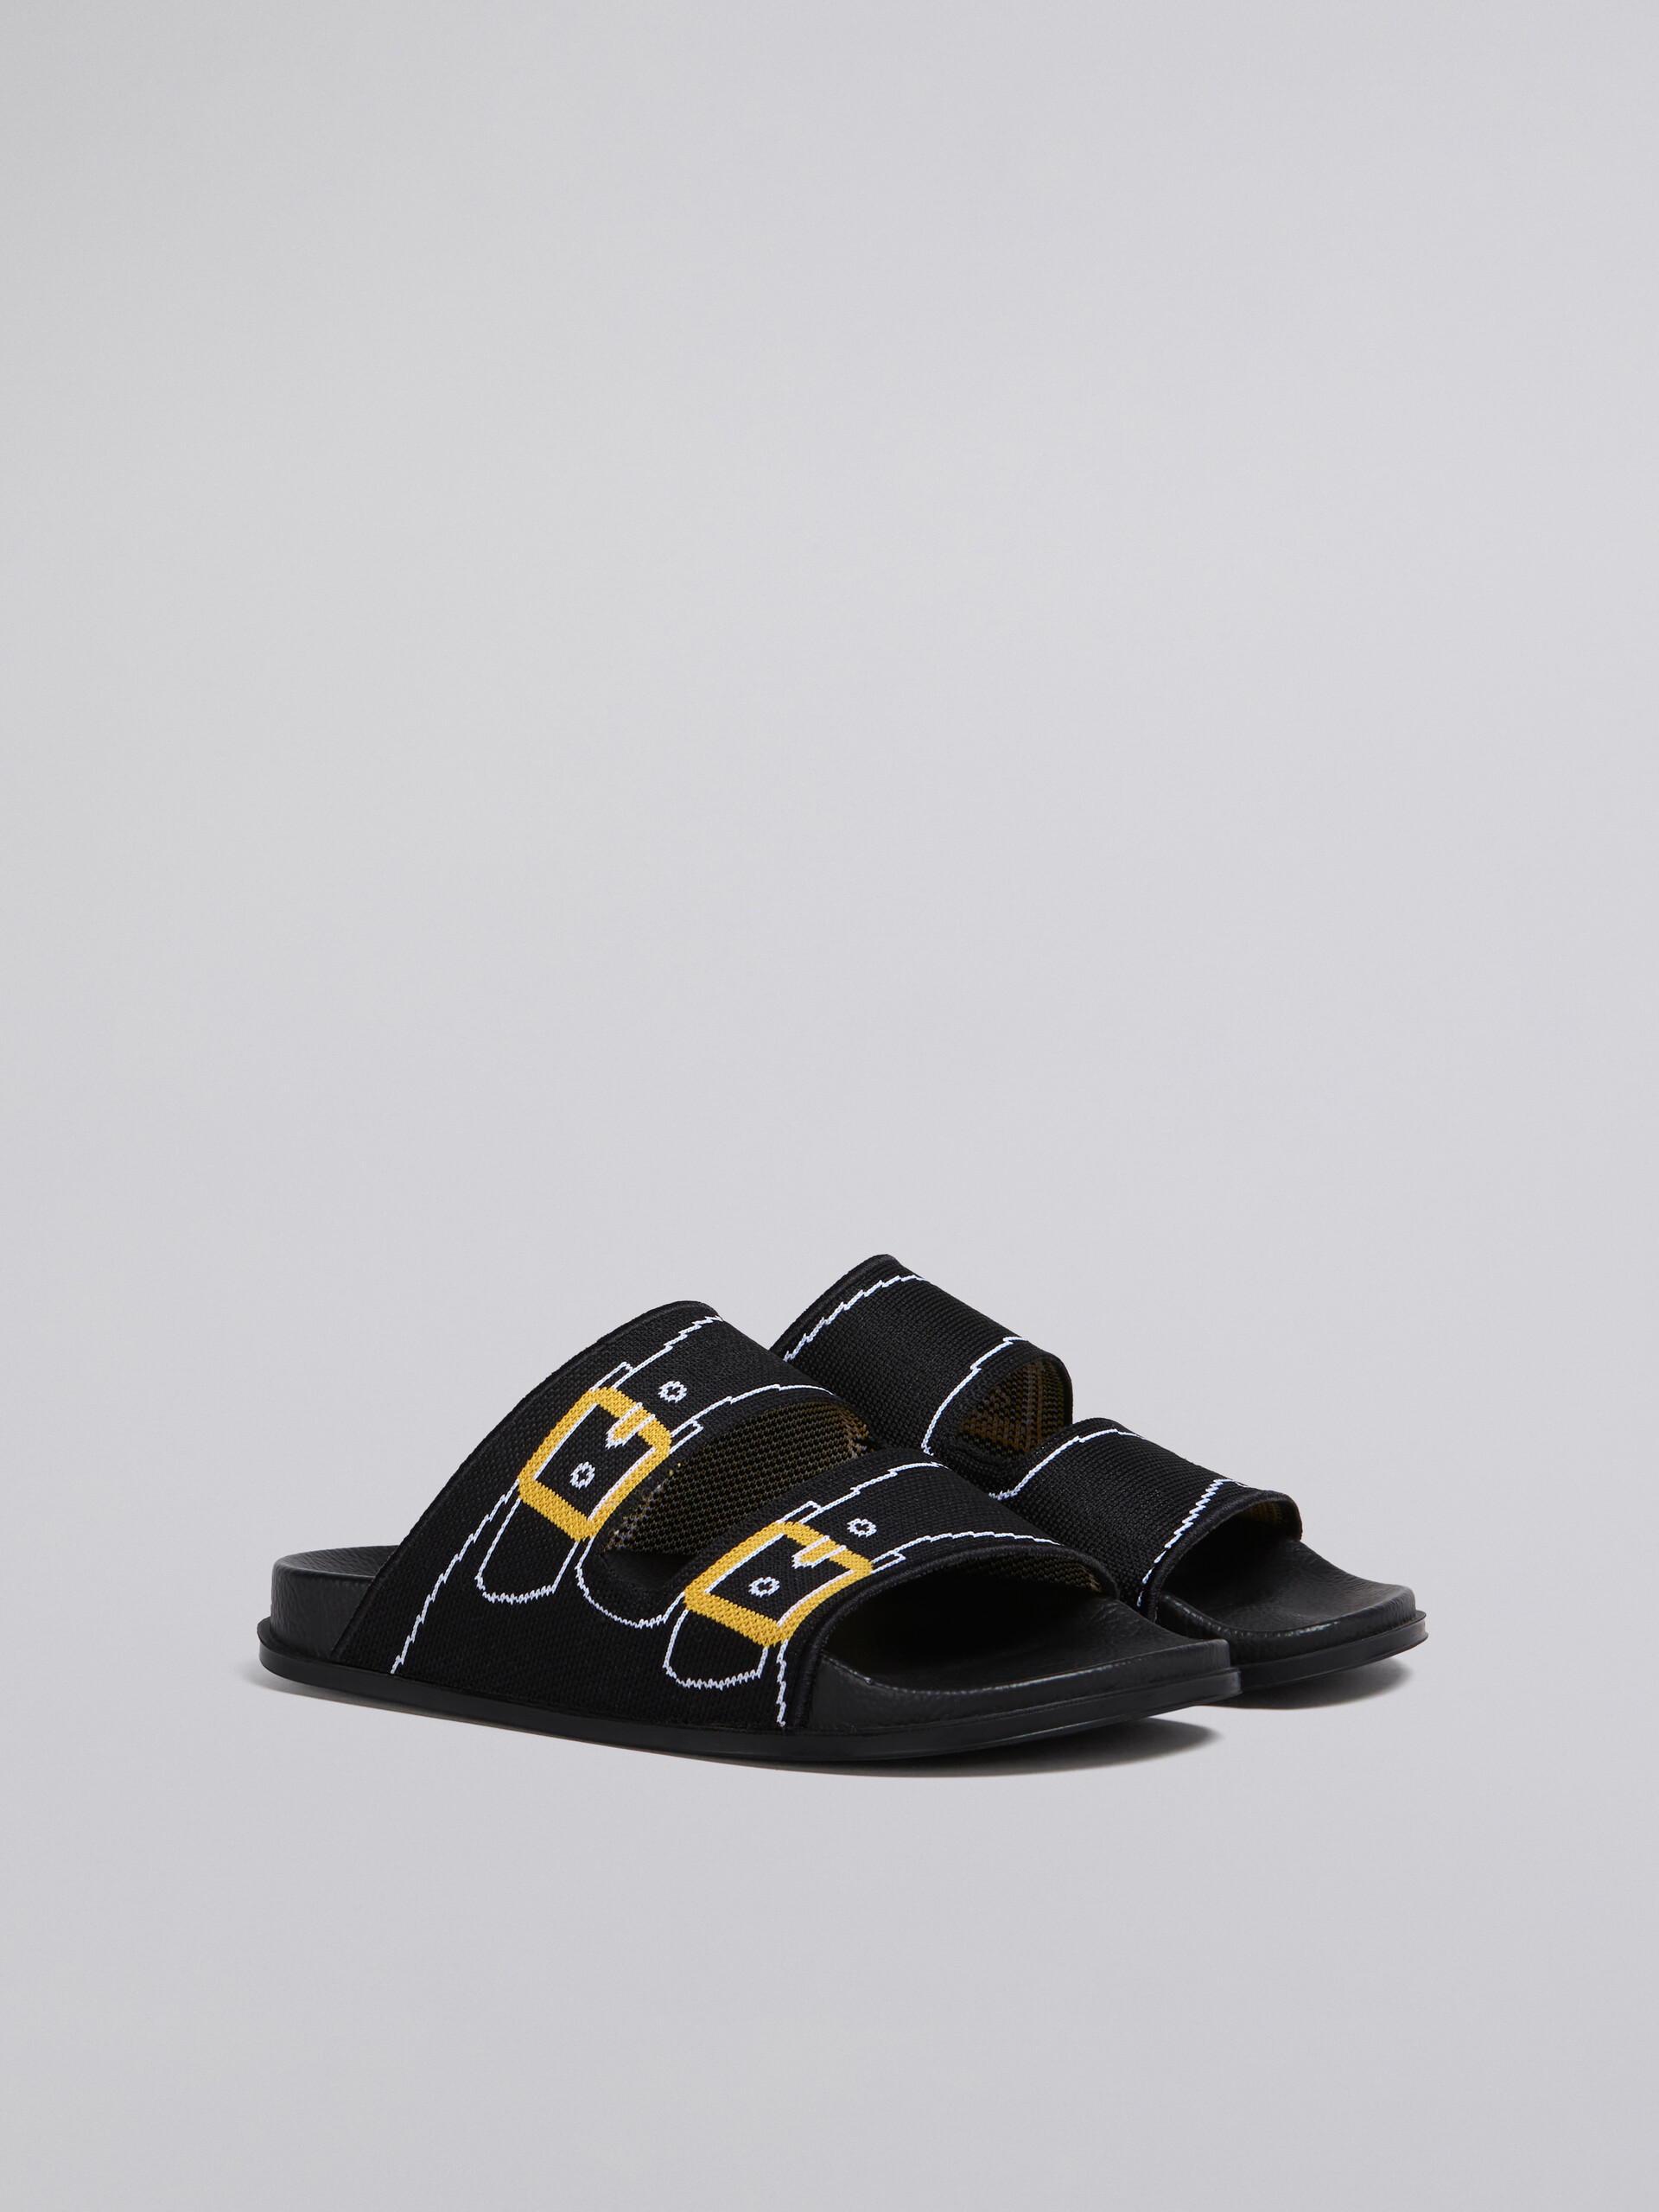 Black and gold trompe l'oeil jacquard two-strap slide - Sandals - Image 2